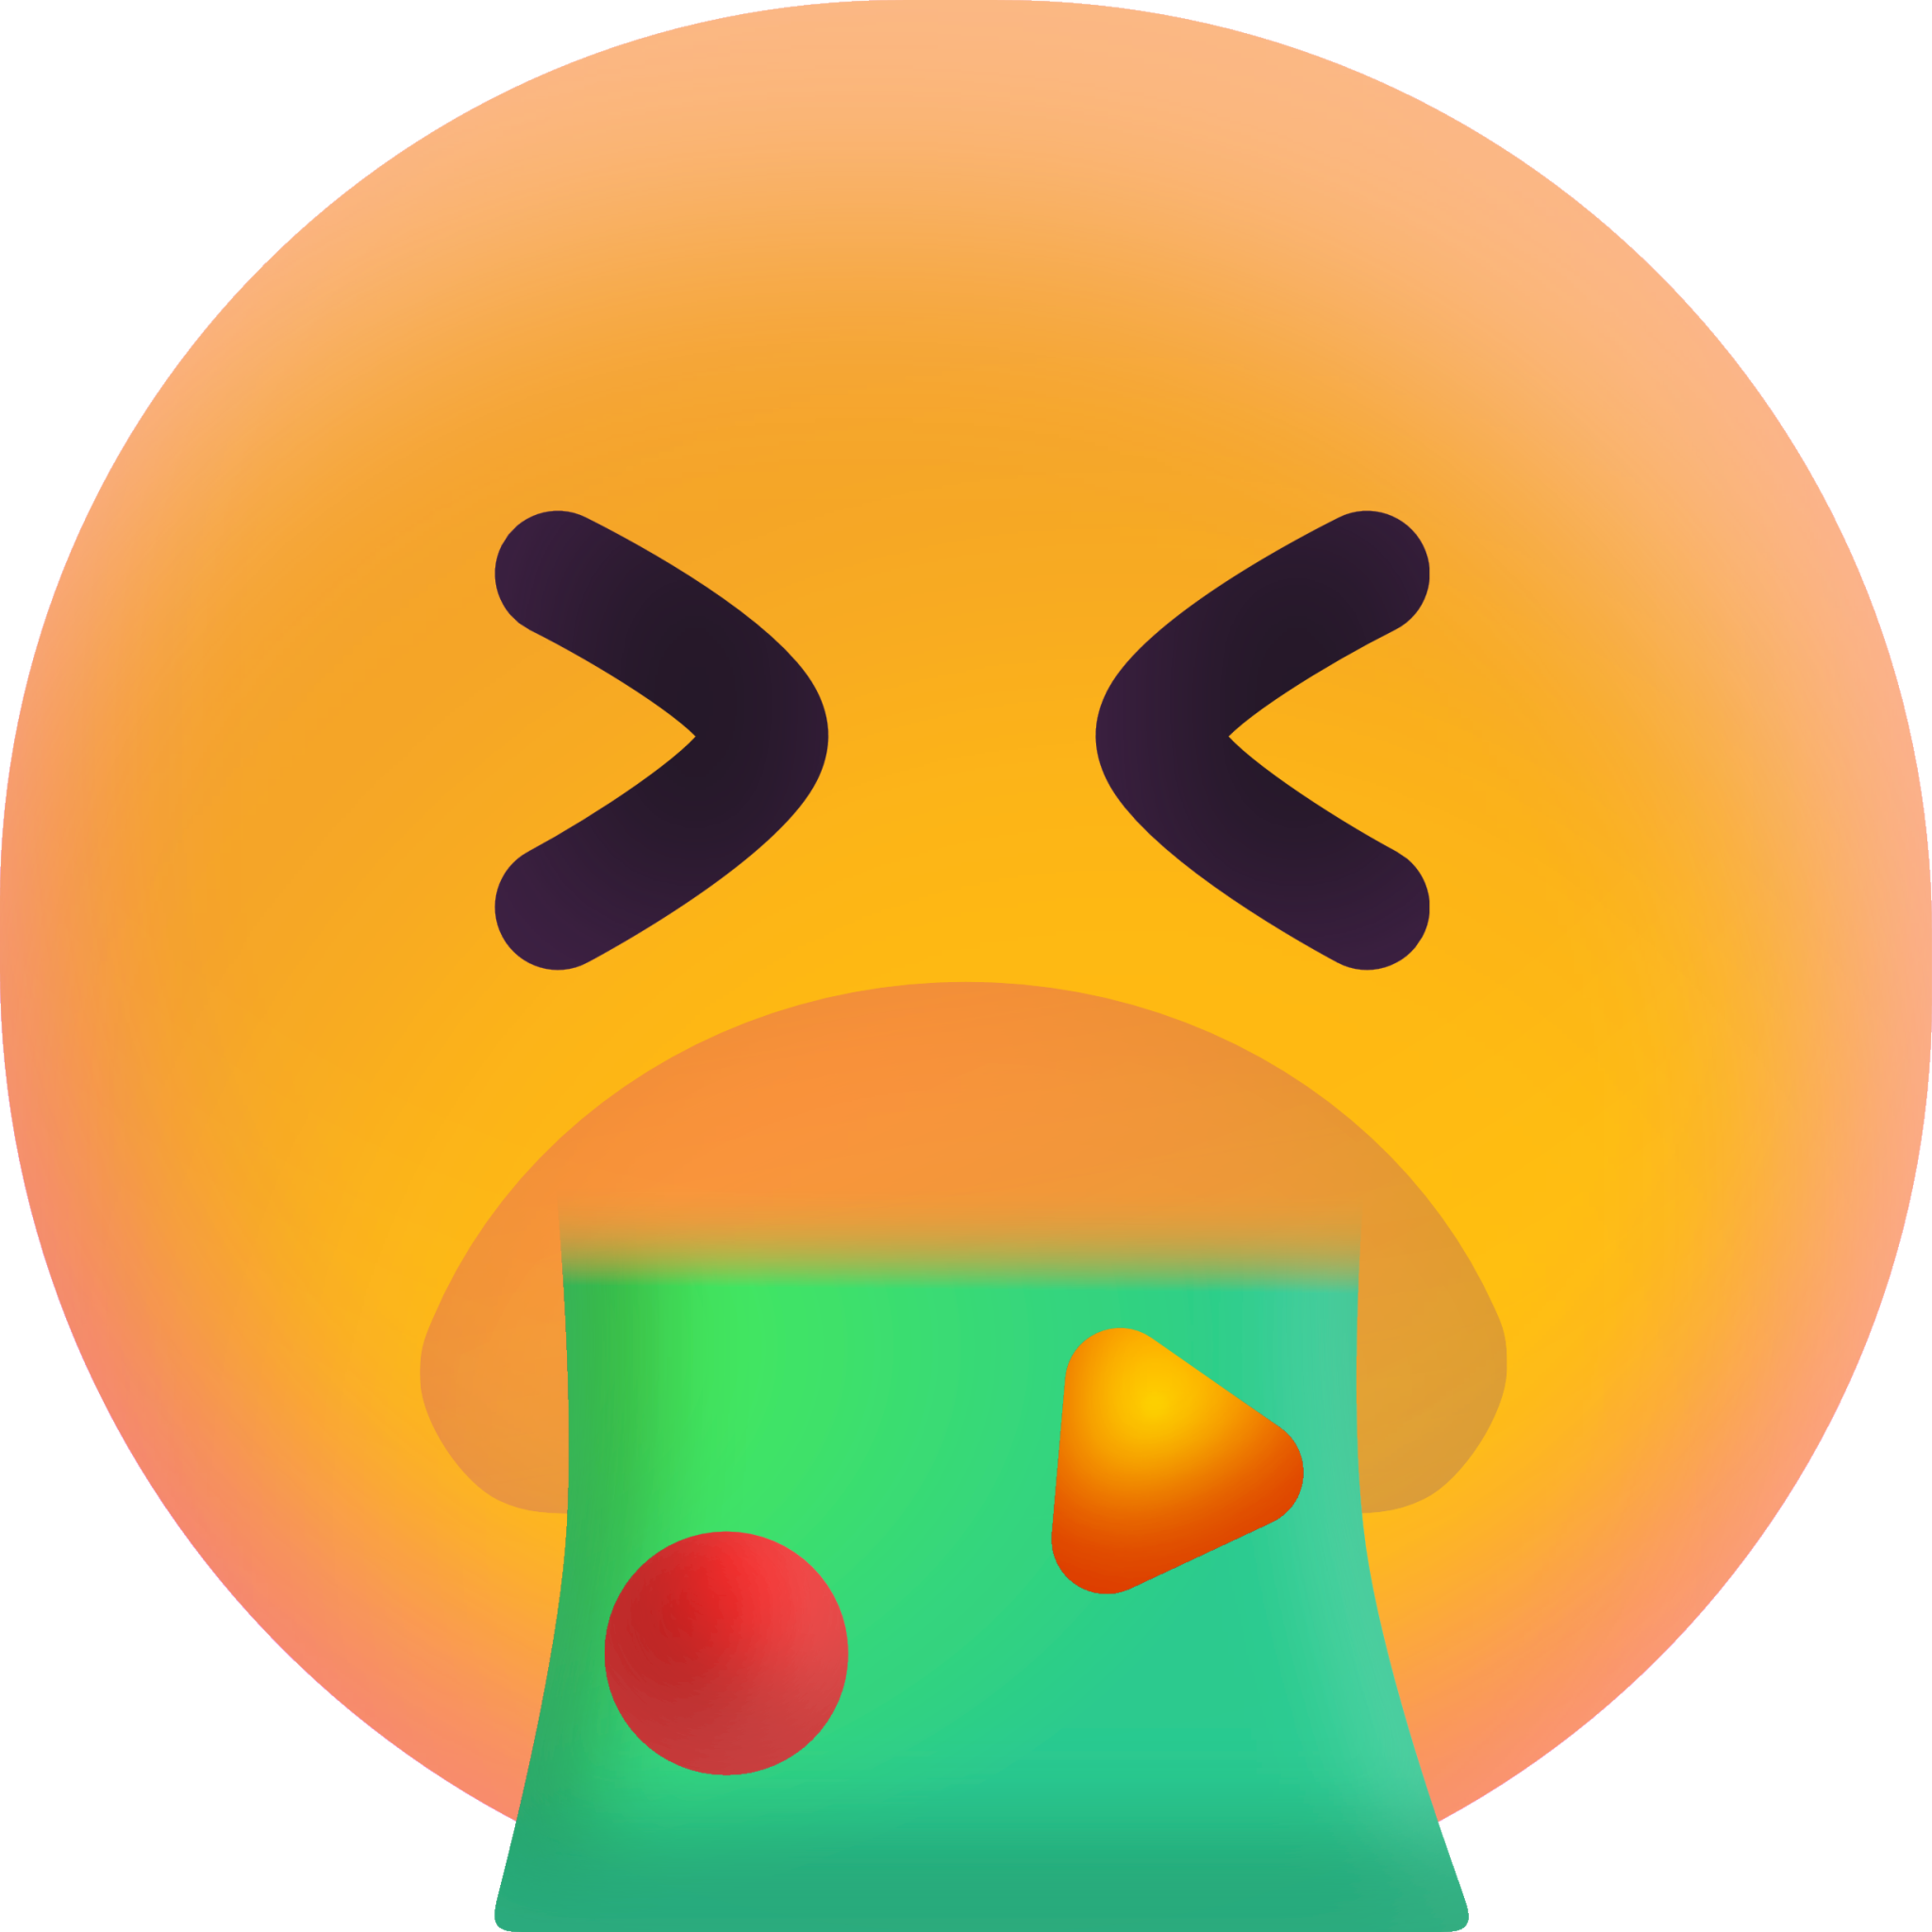 Face Vomiting emoji